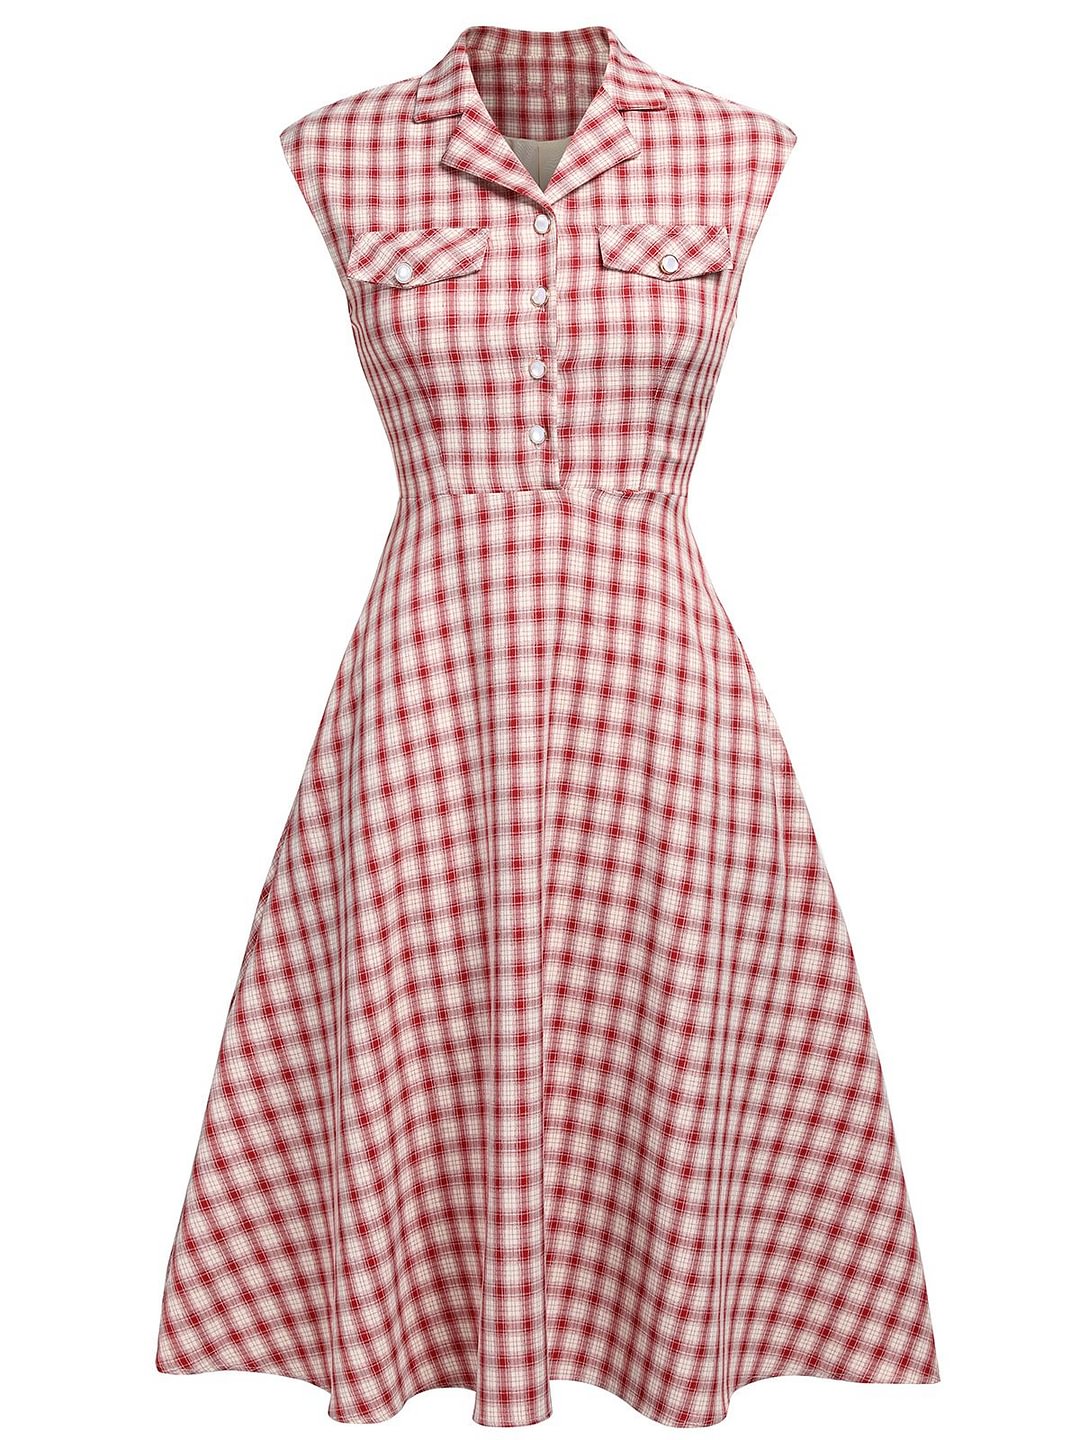 Pink 1950s Plaid Lapel Collar Swing Dress